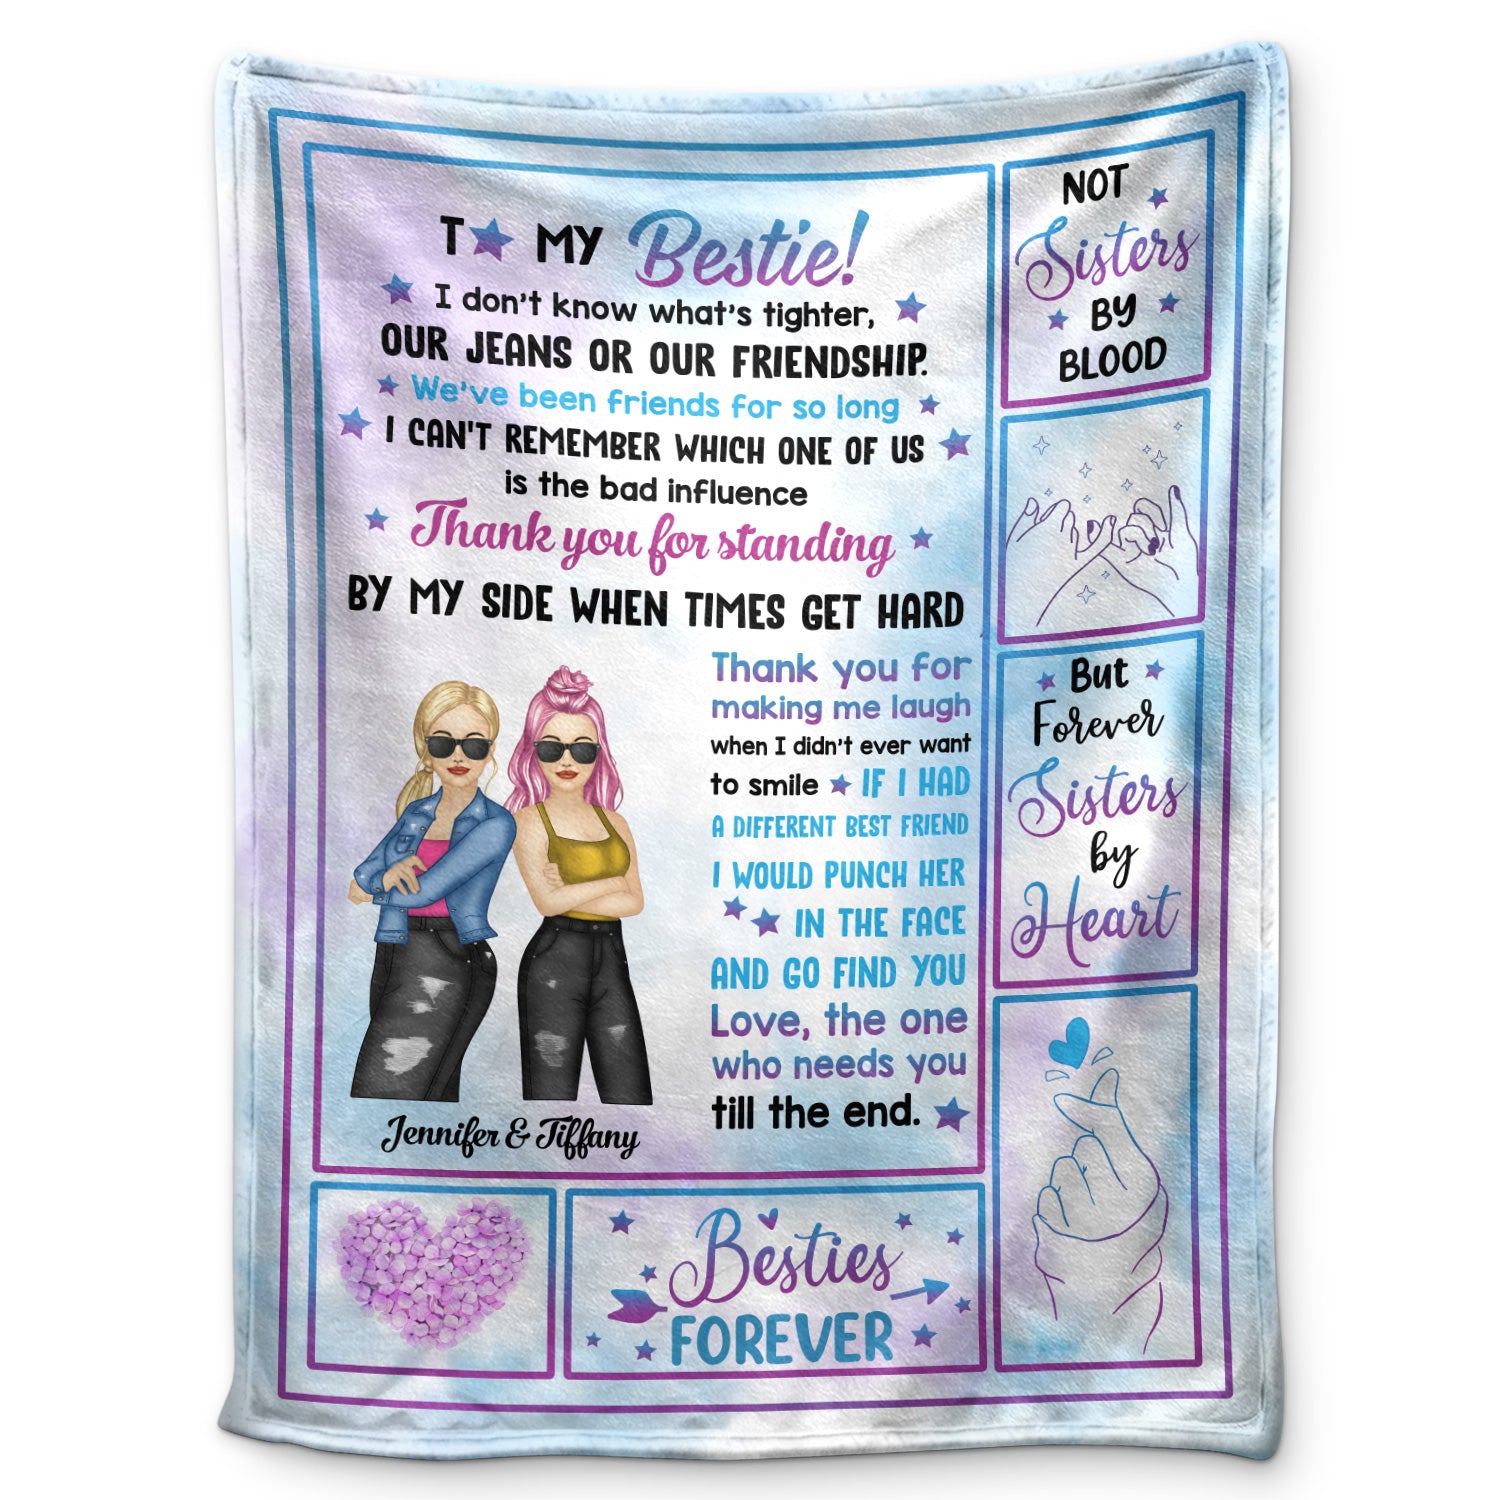 Fashion Girls Forever Sisters By Heart - Gift For Besties, BFF Best Friends, Siblings - Personalized Fleece Blanket